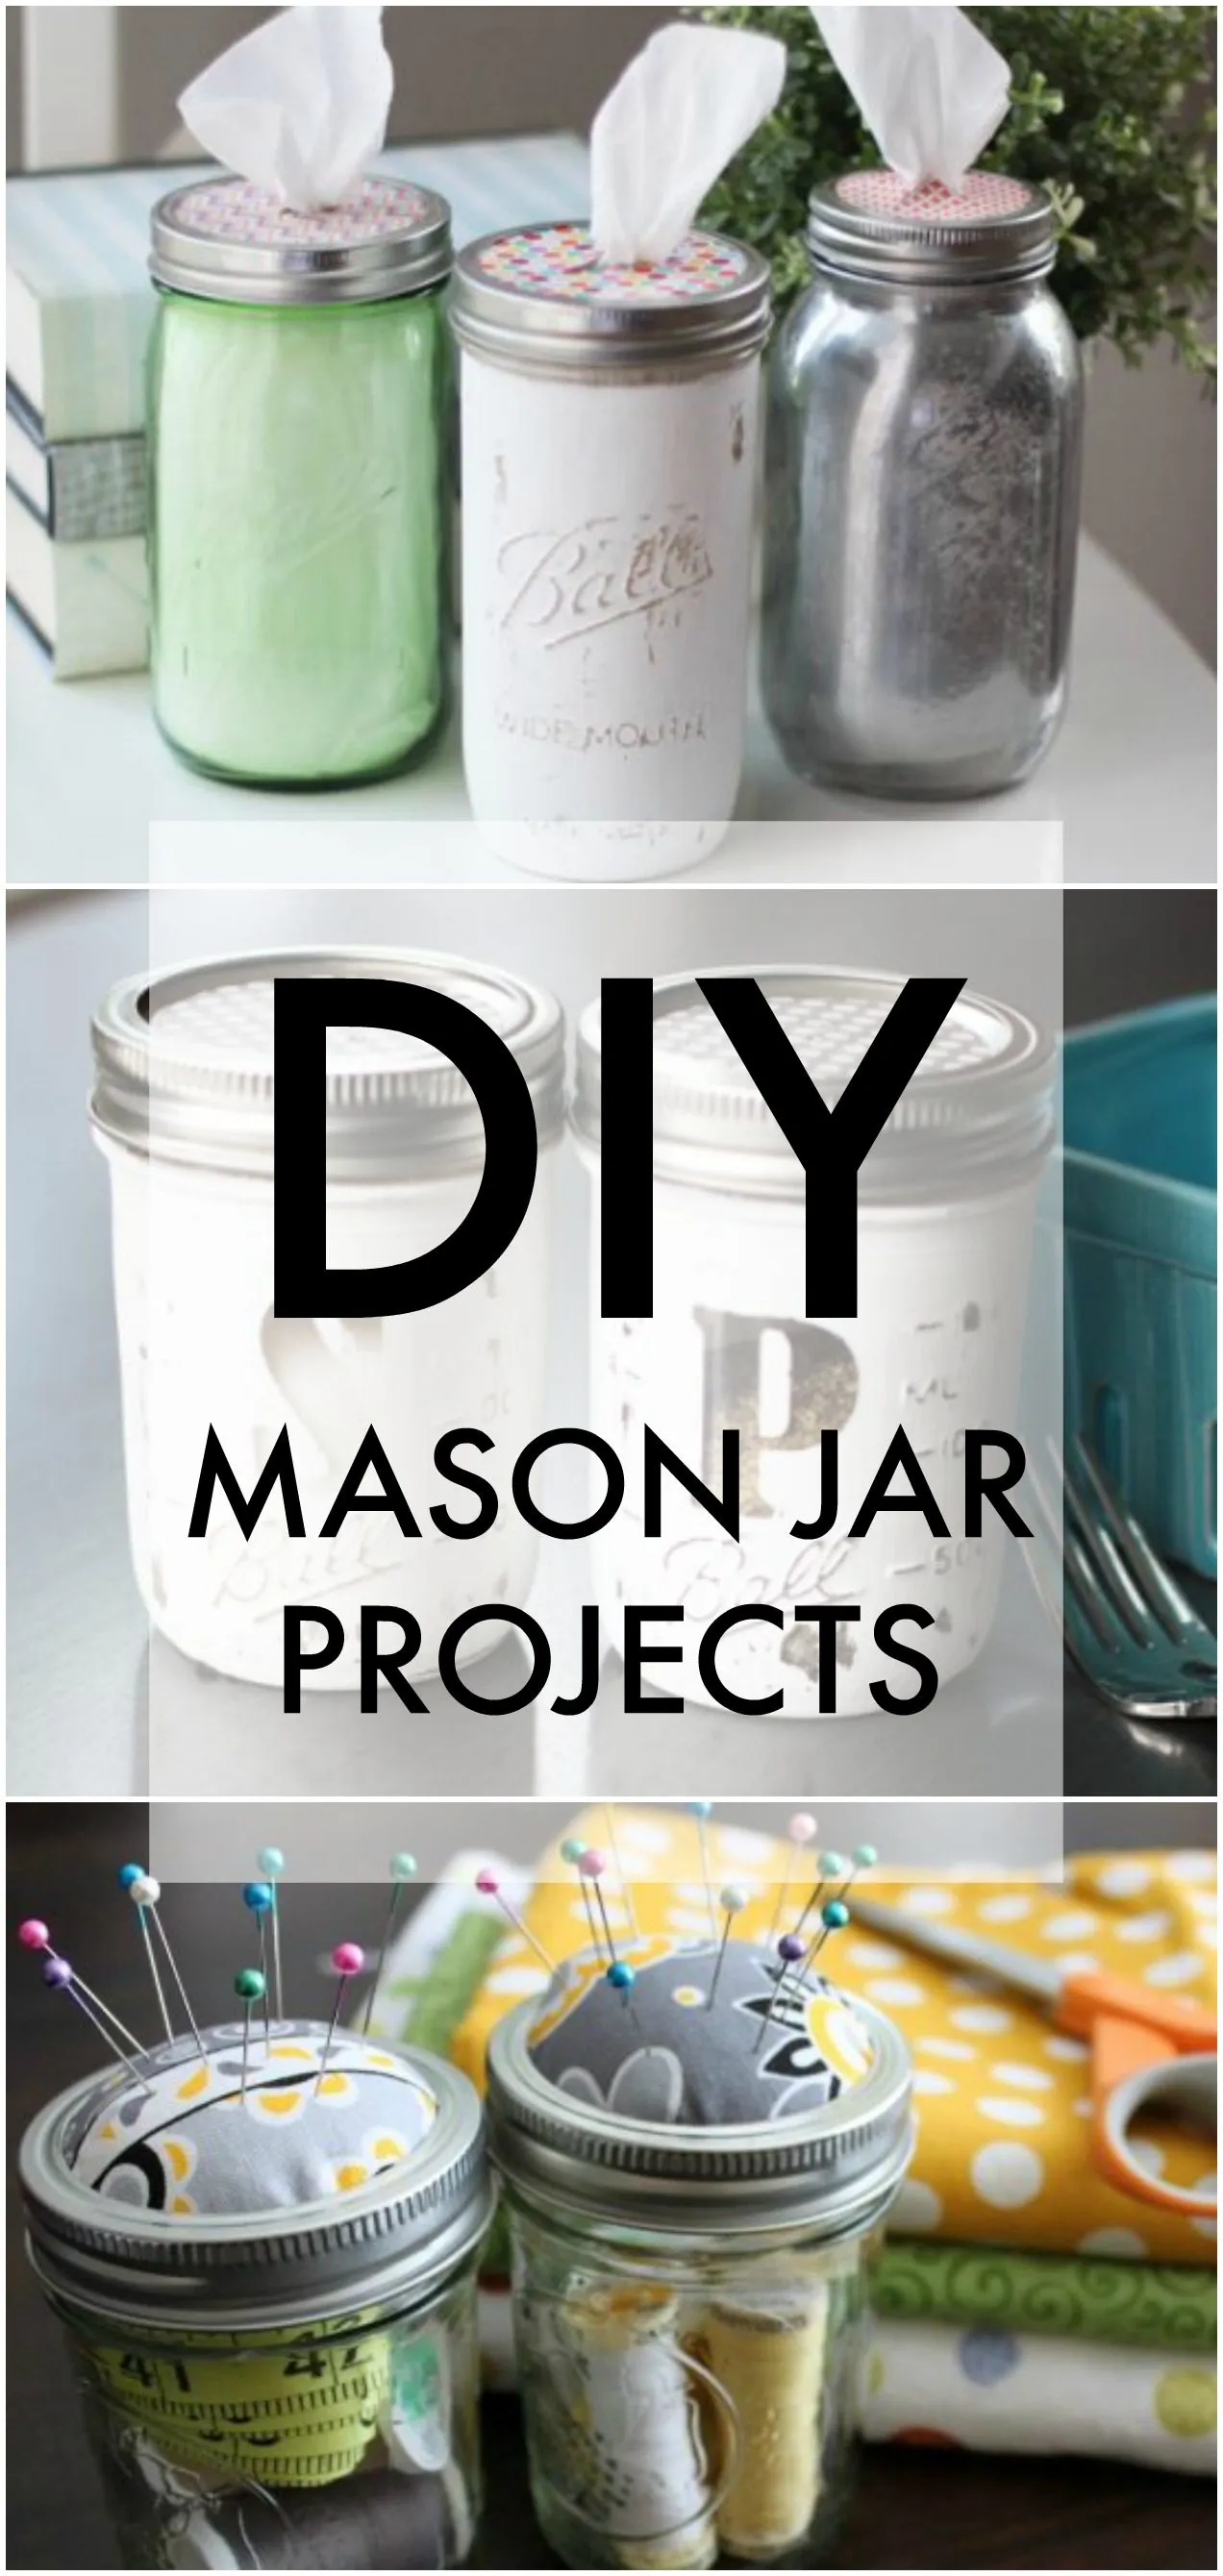 Easy DIY: Mason Jar Crafts - REASONS TO SKIP THE HOUSEWORK